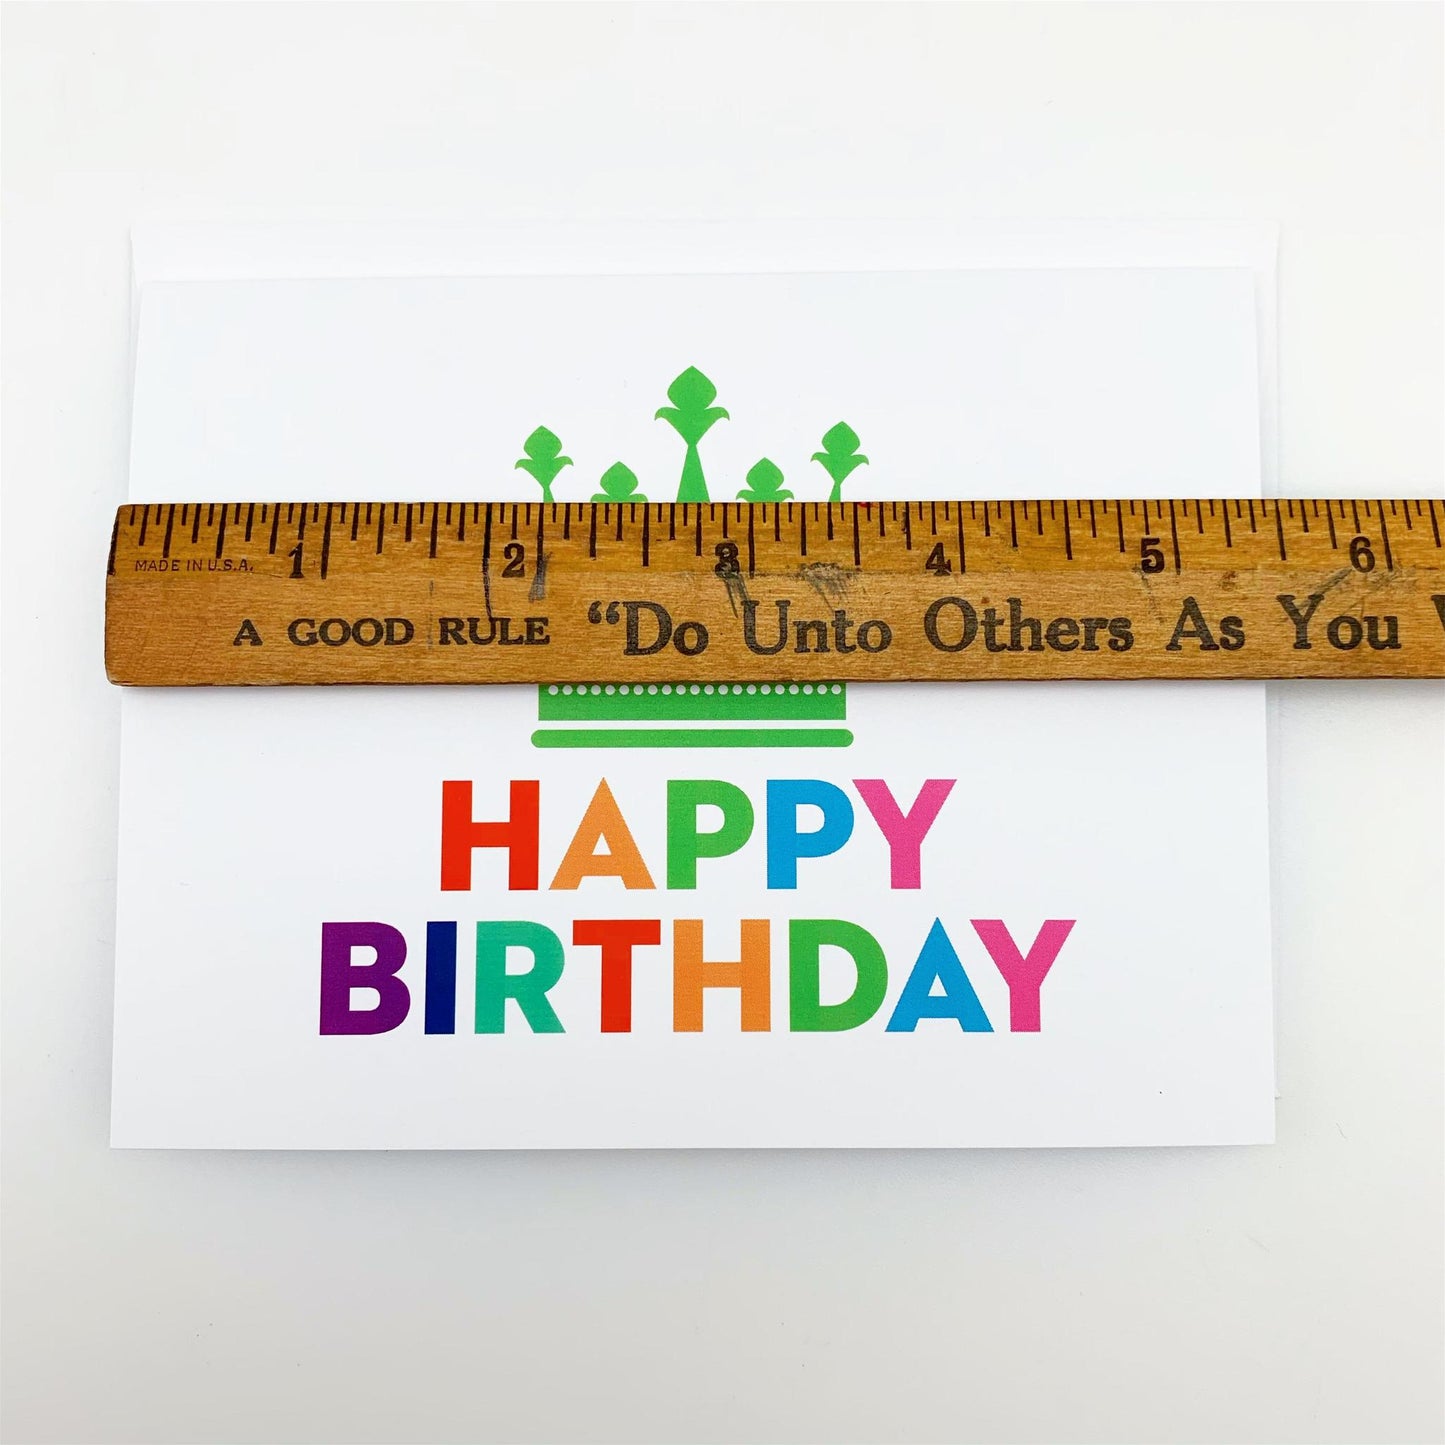 Greeting Card - "Happy Birthday" Crown